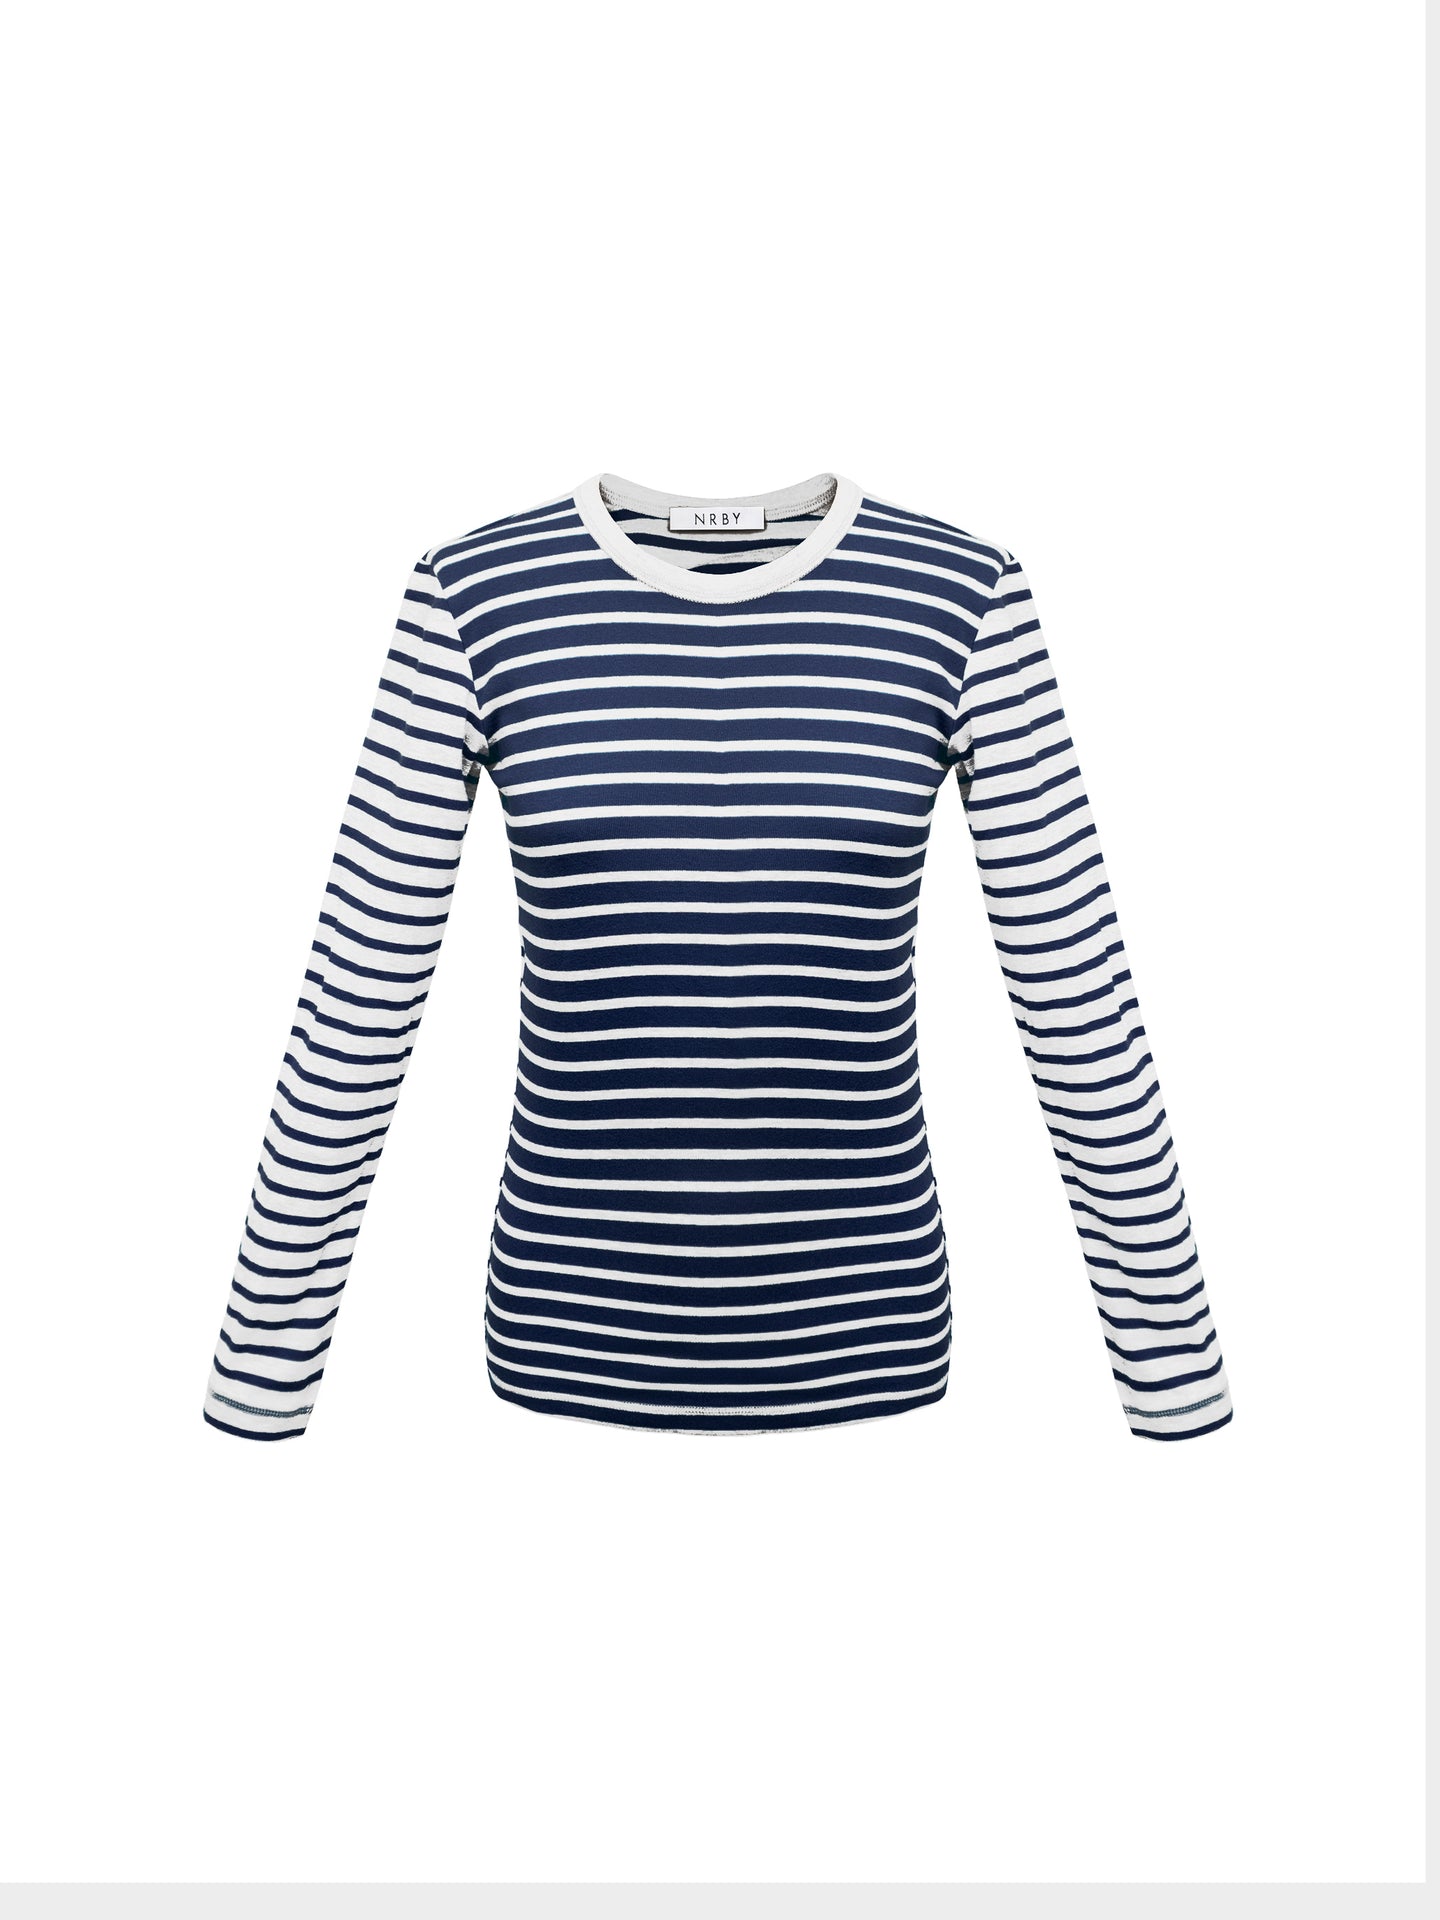 Billie two-tone cotton rib stripe t-shirt - Navy/White